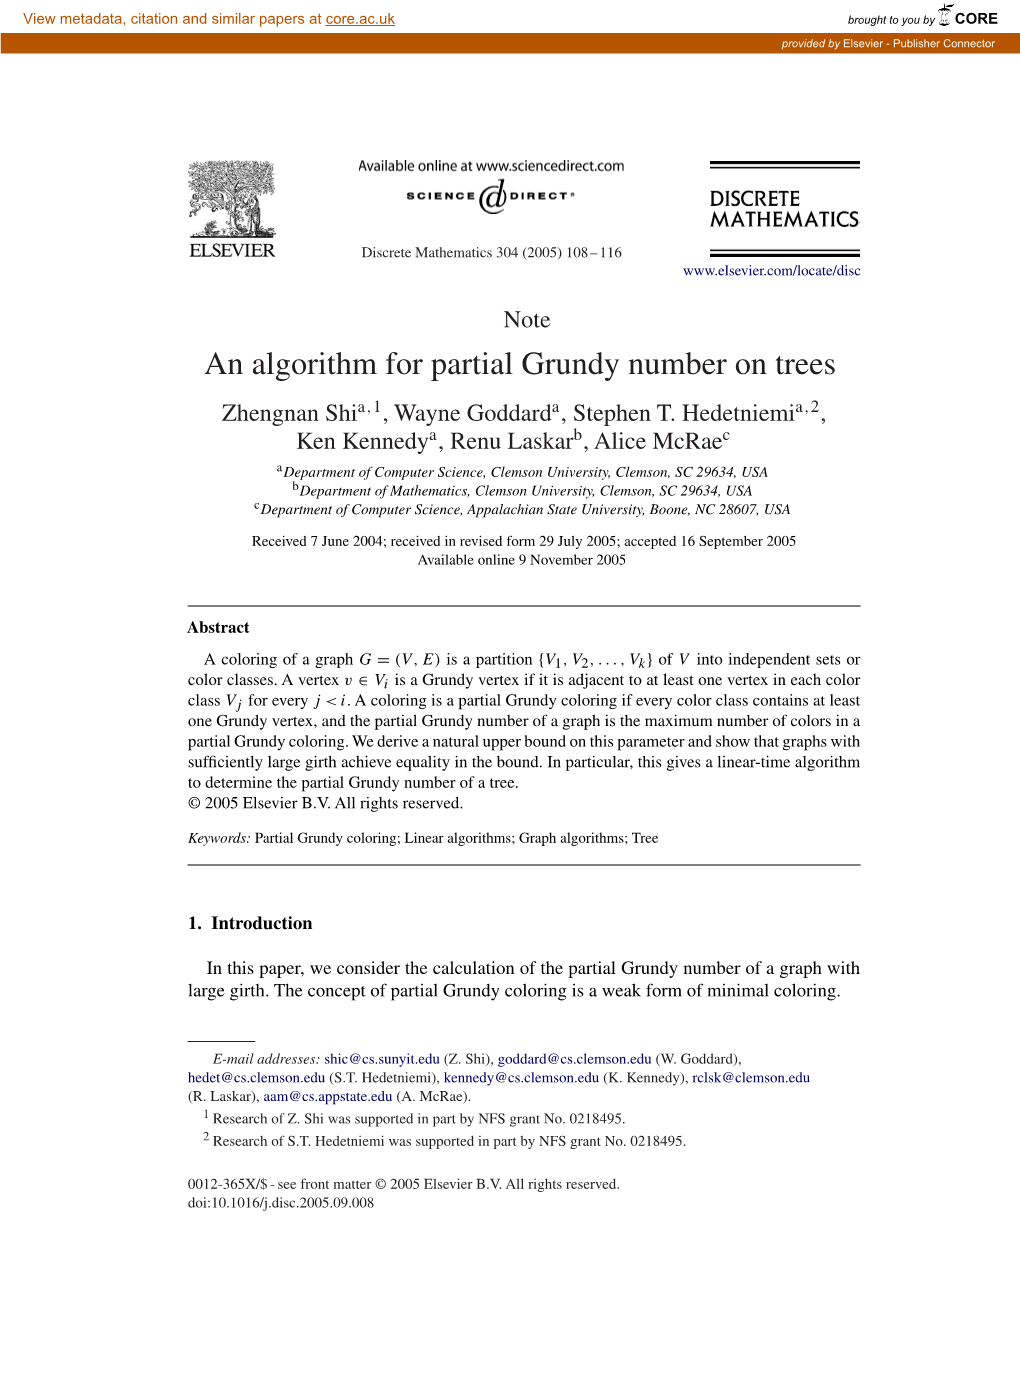 An Algorithm for Partial Grundy Number on Trees Zhengnan Shia,1, Wayne Goddarda, Stephen T